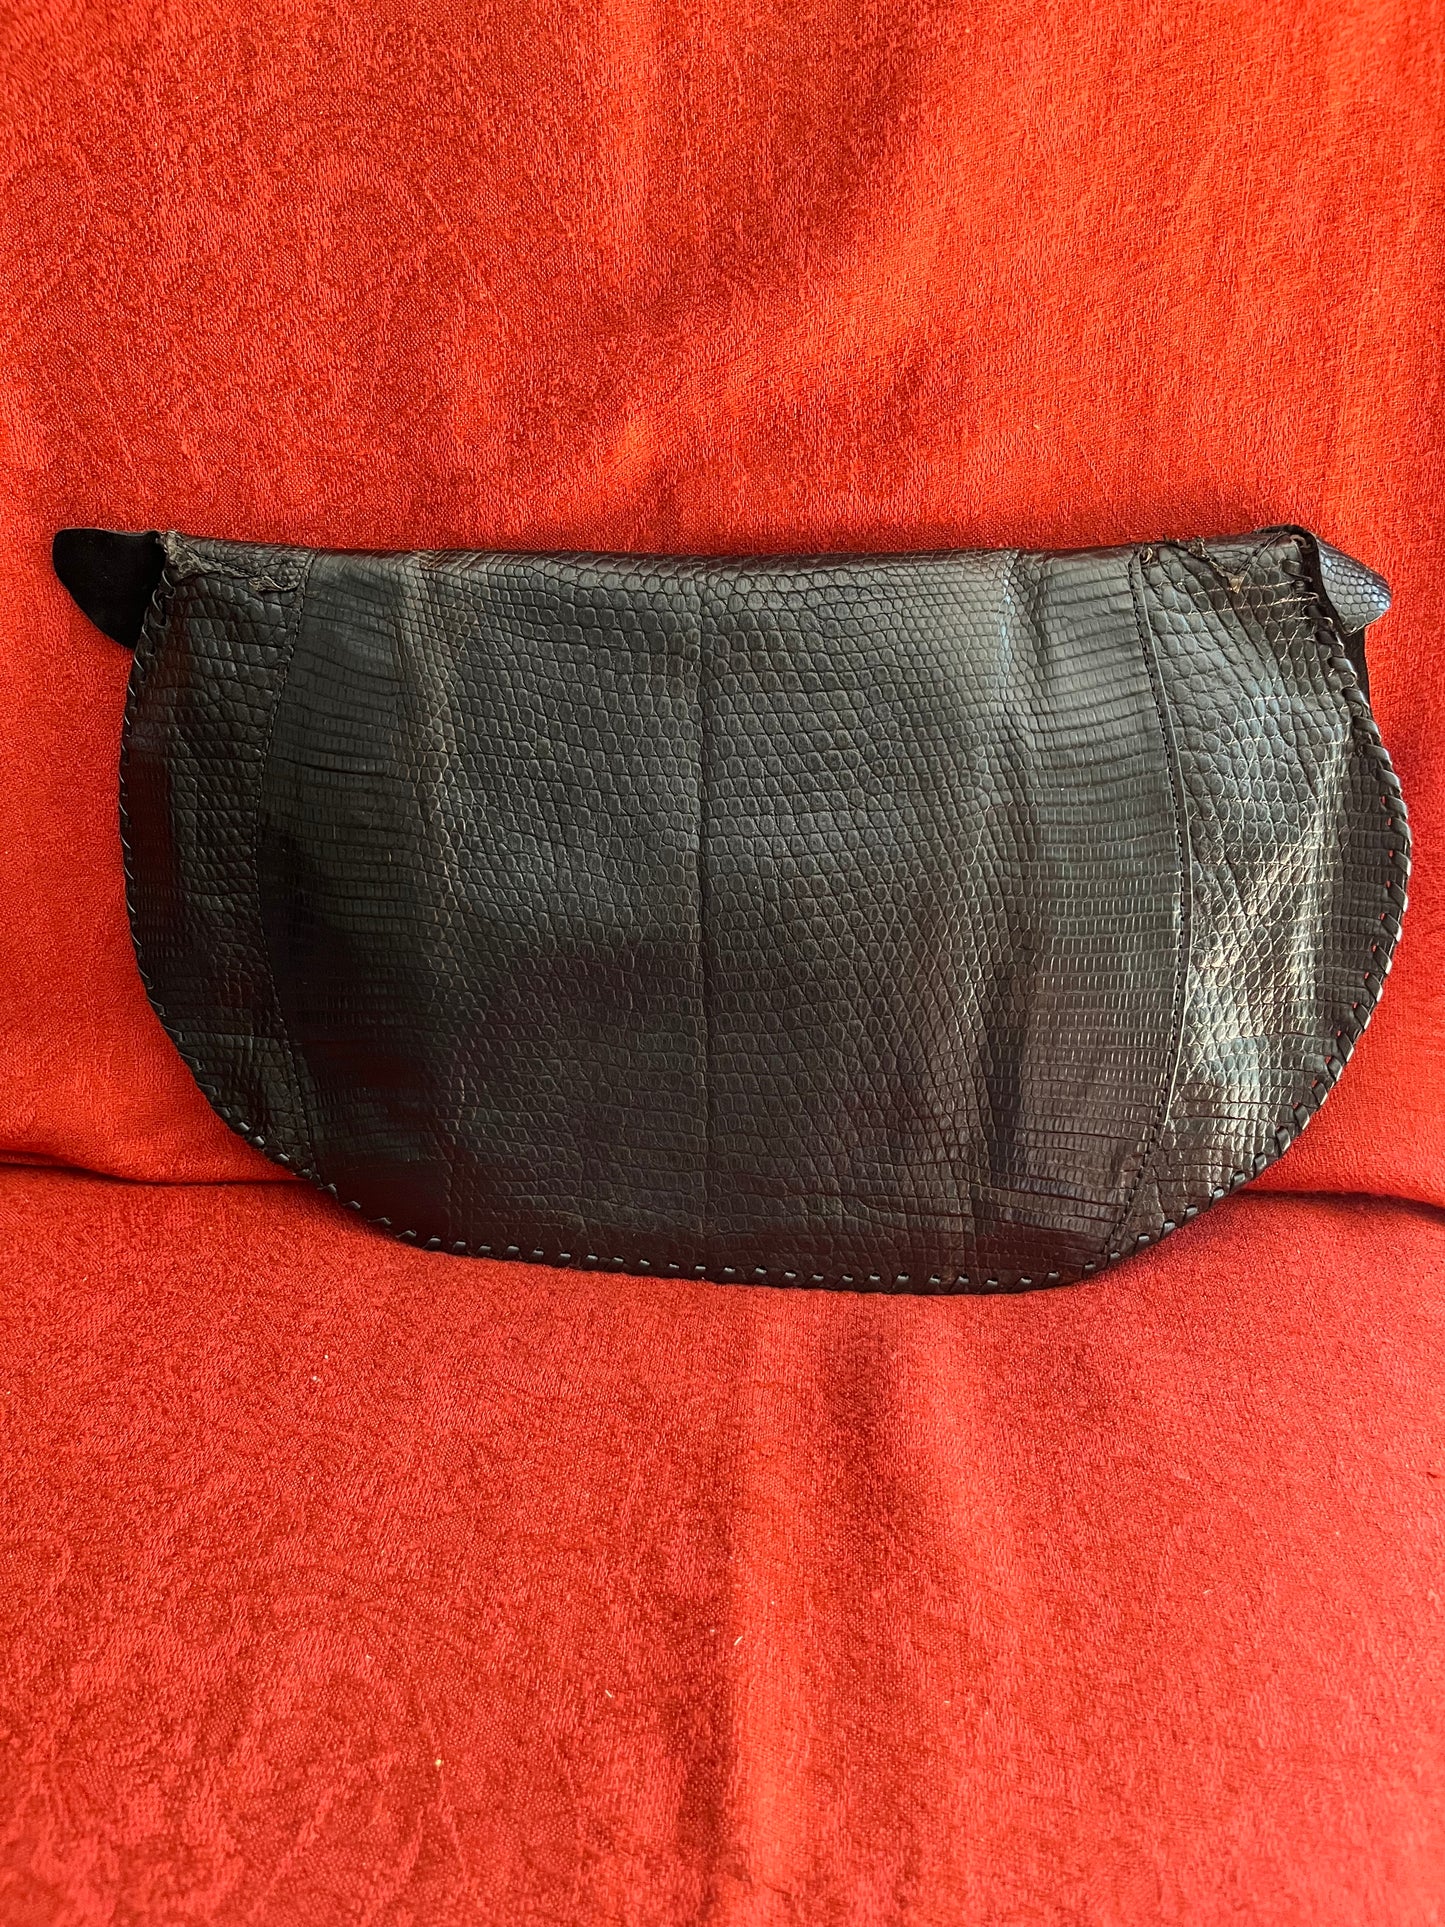 Vintage Ann Turk Lizard Leather Envelope Clutch